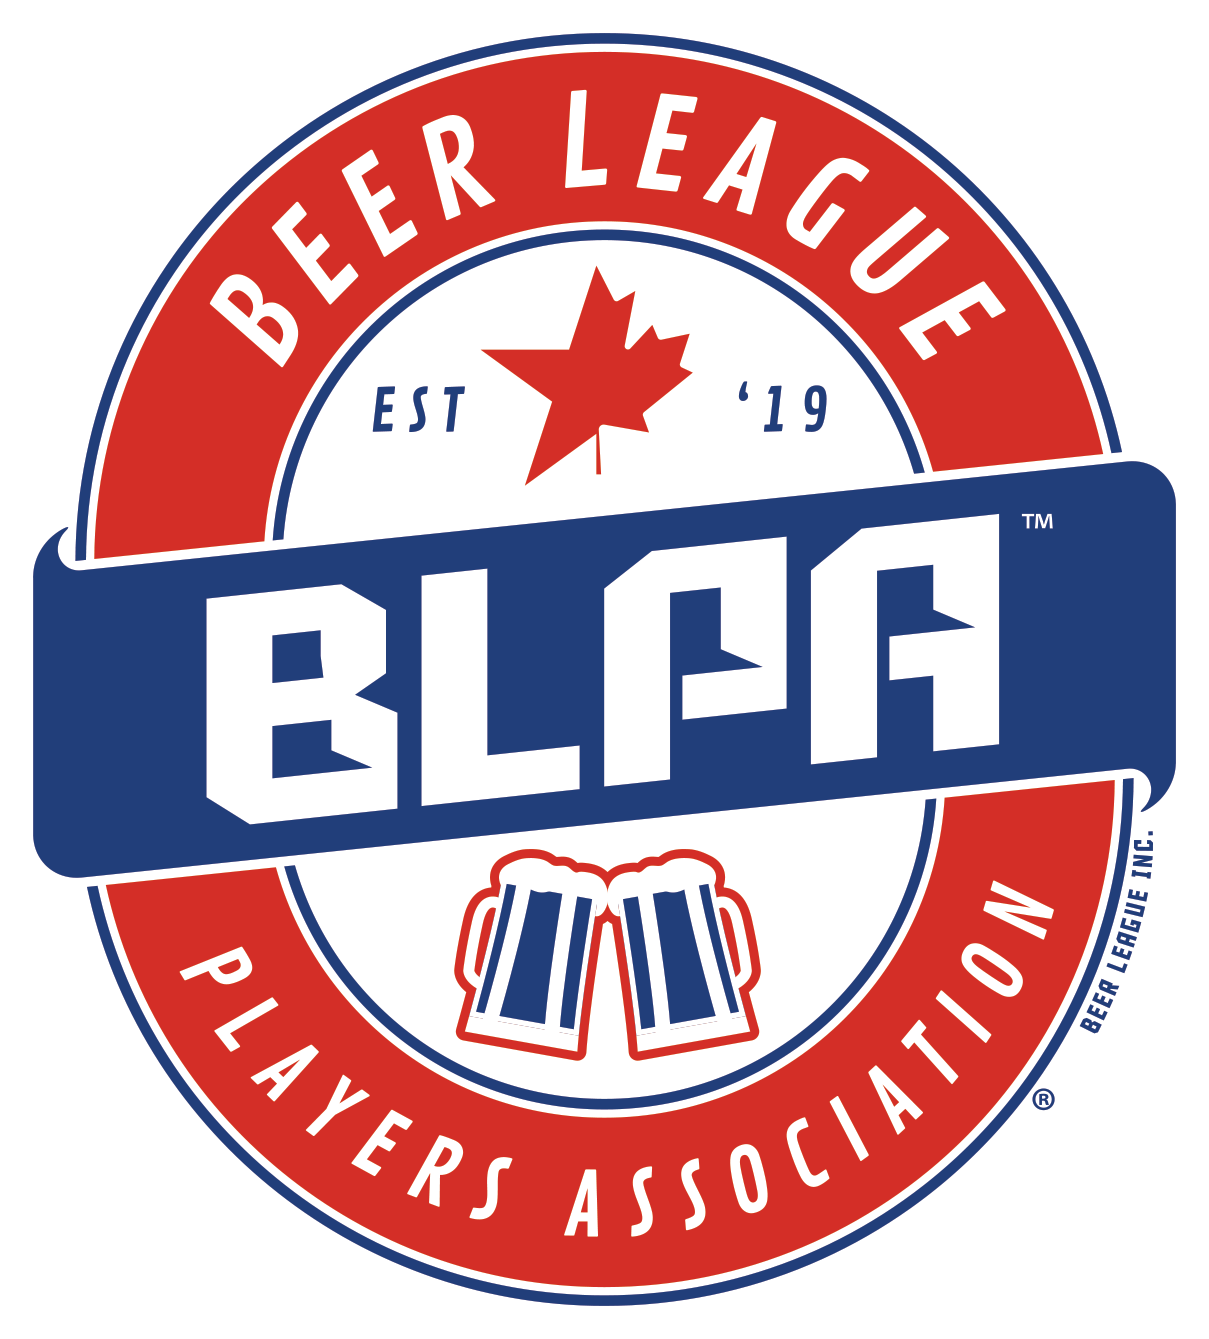 Beer League Players Association